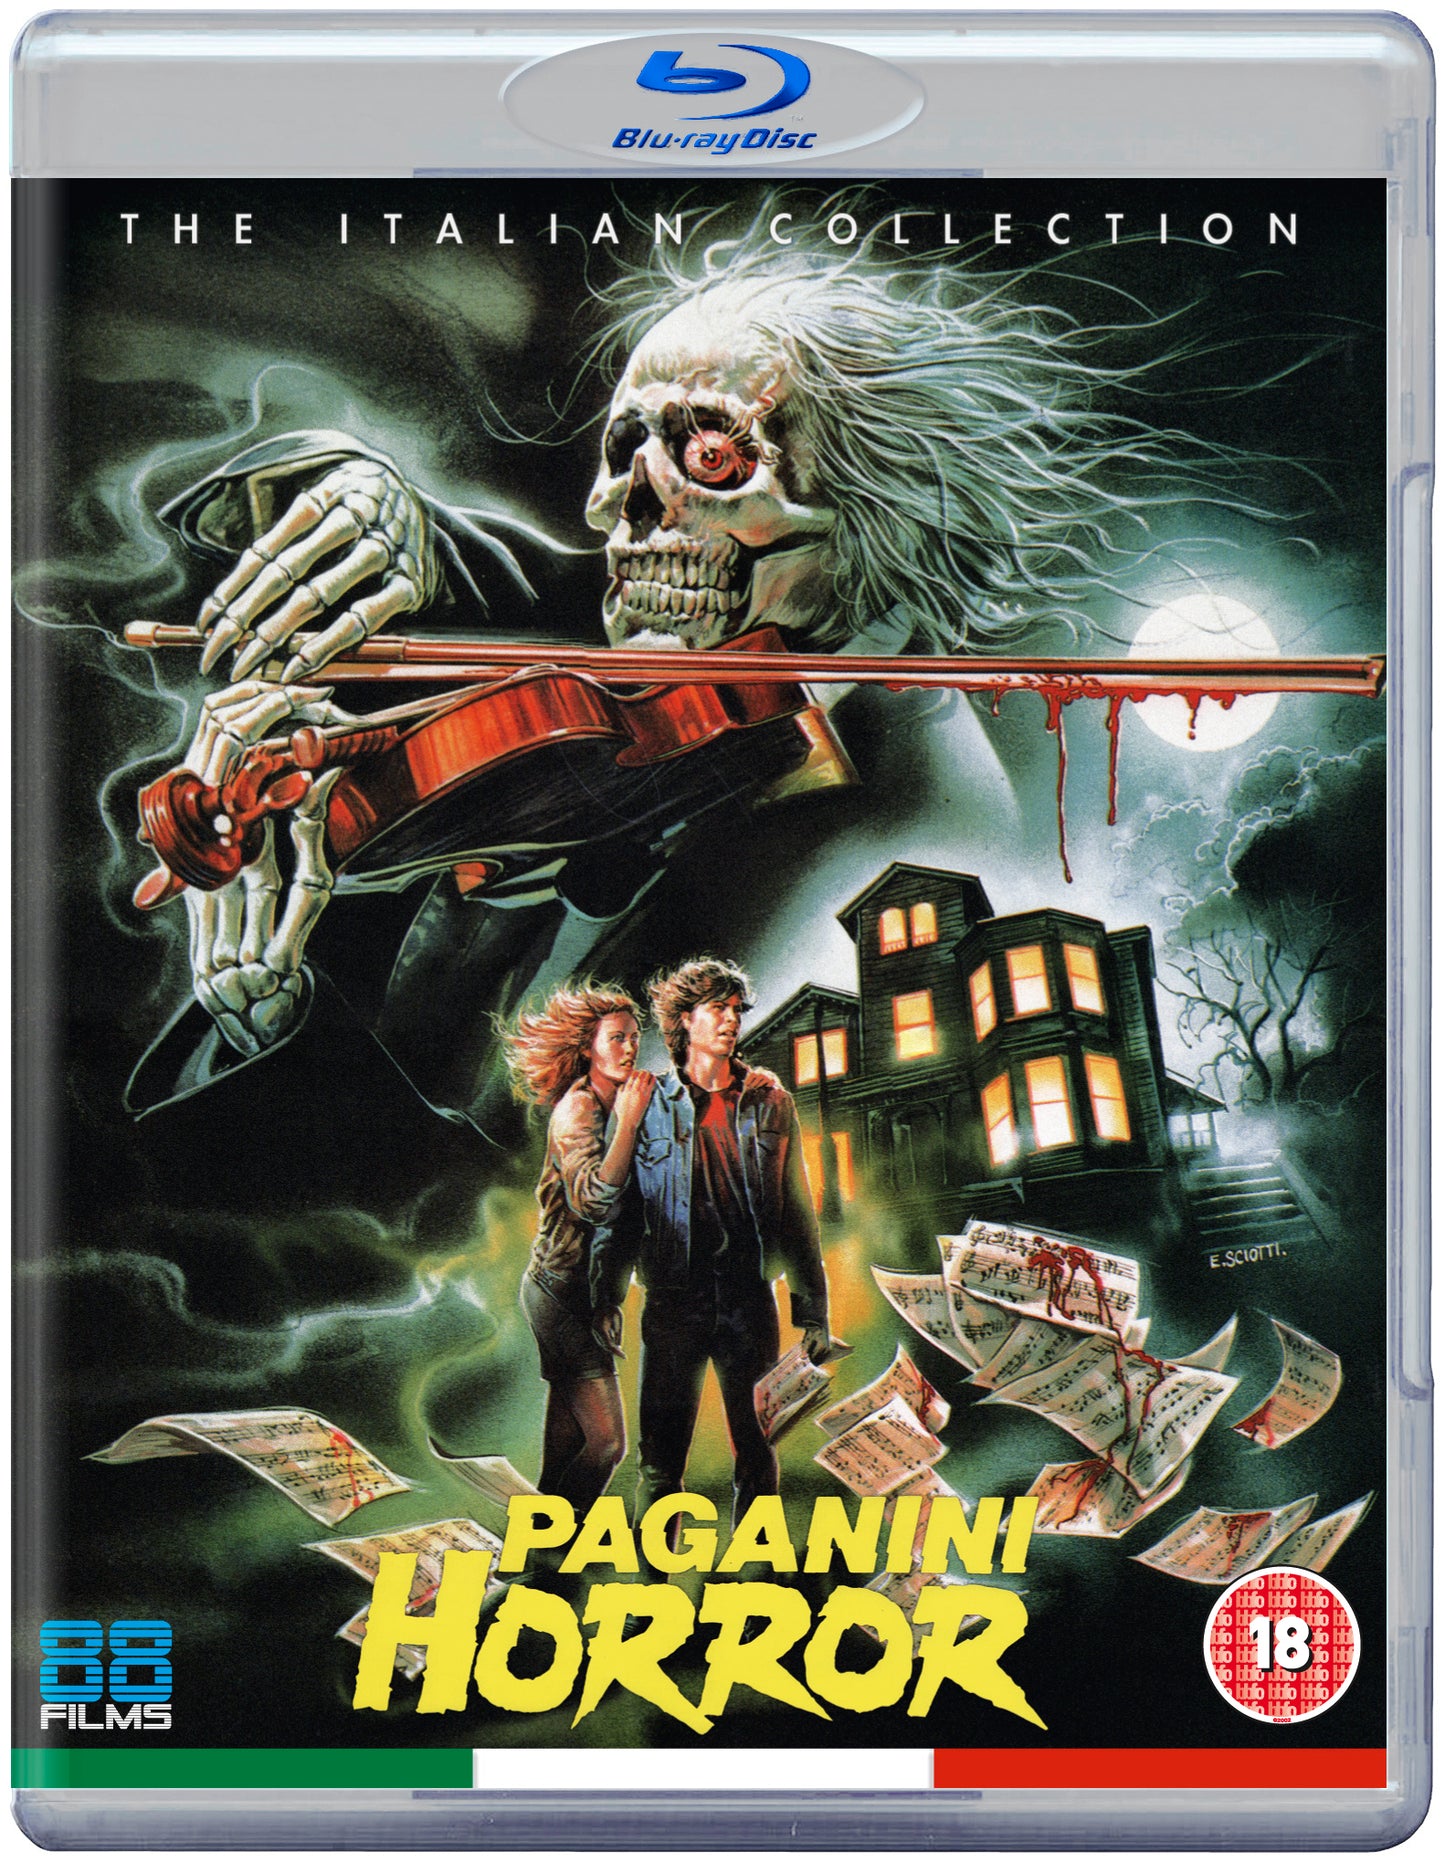 Paganini Horror - The Italian Collection 52